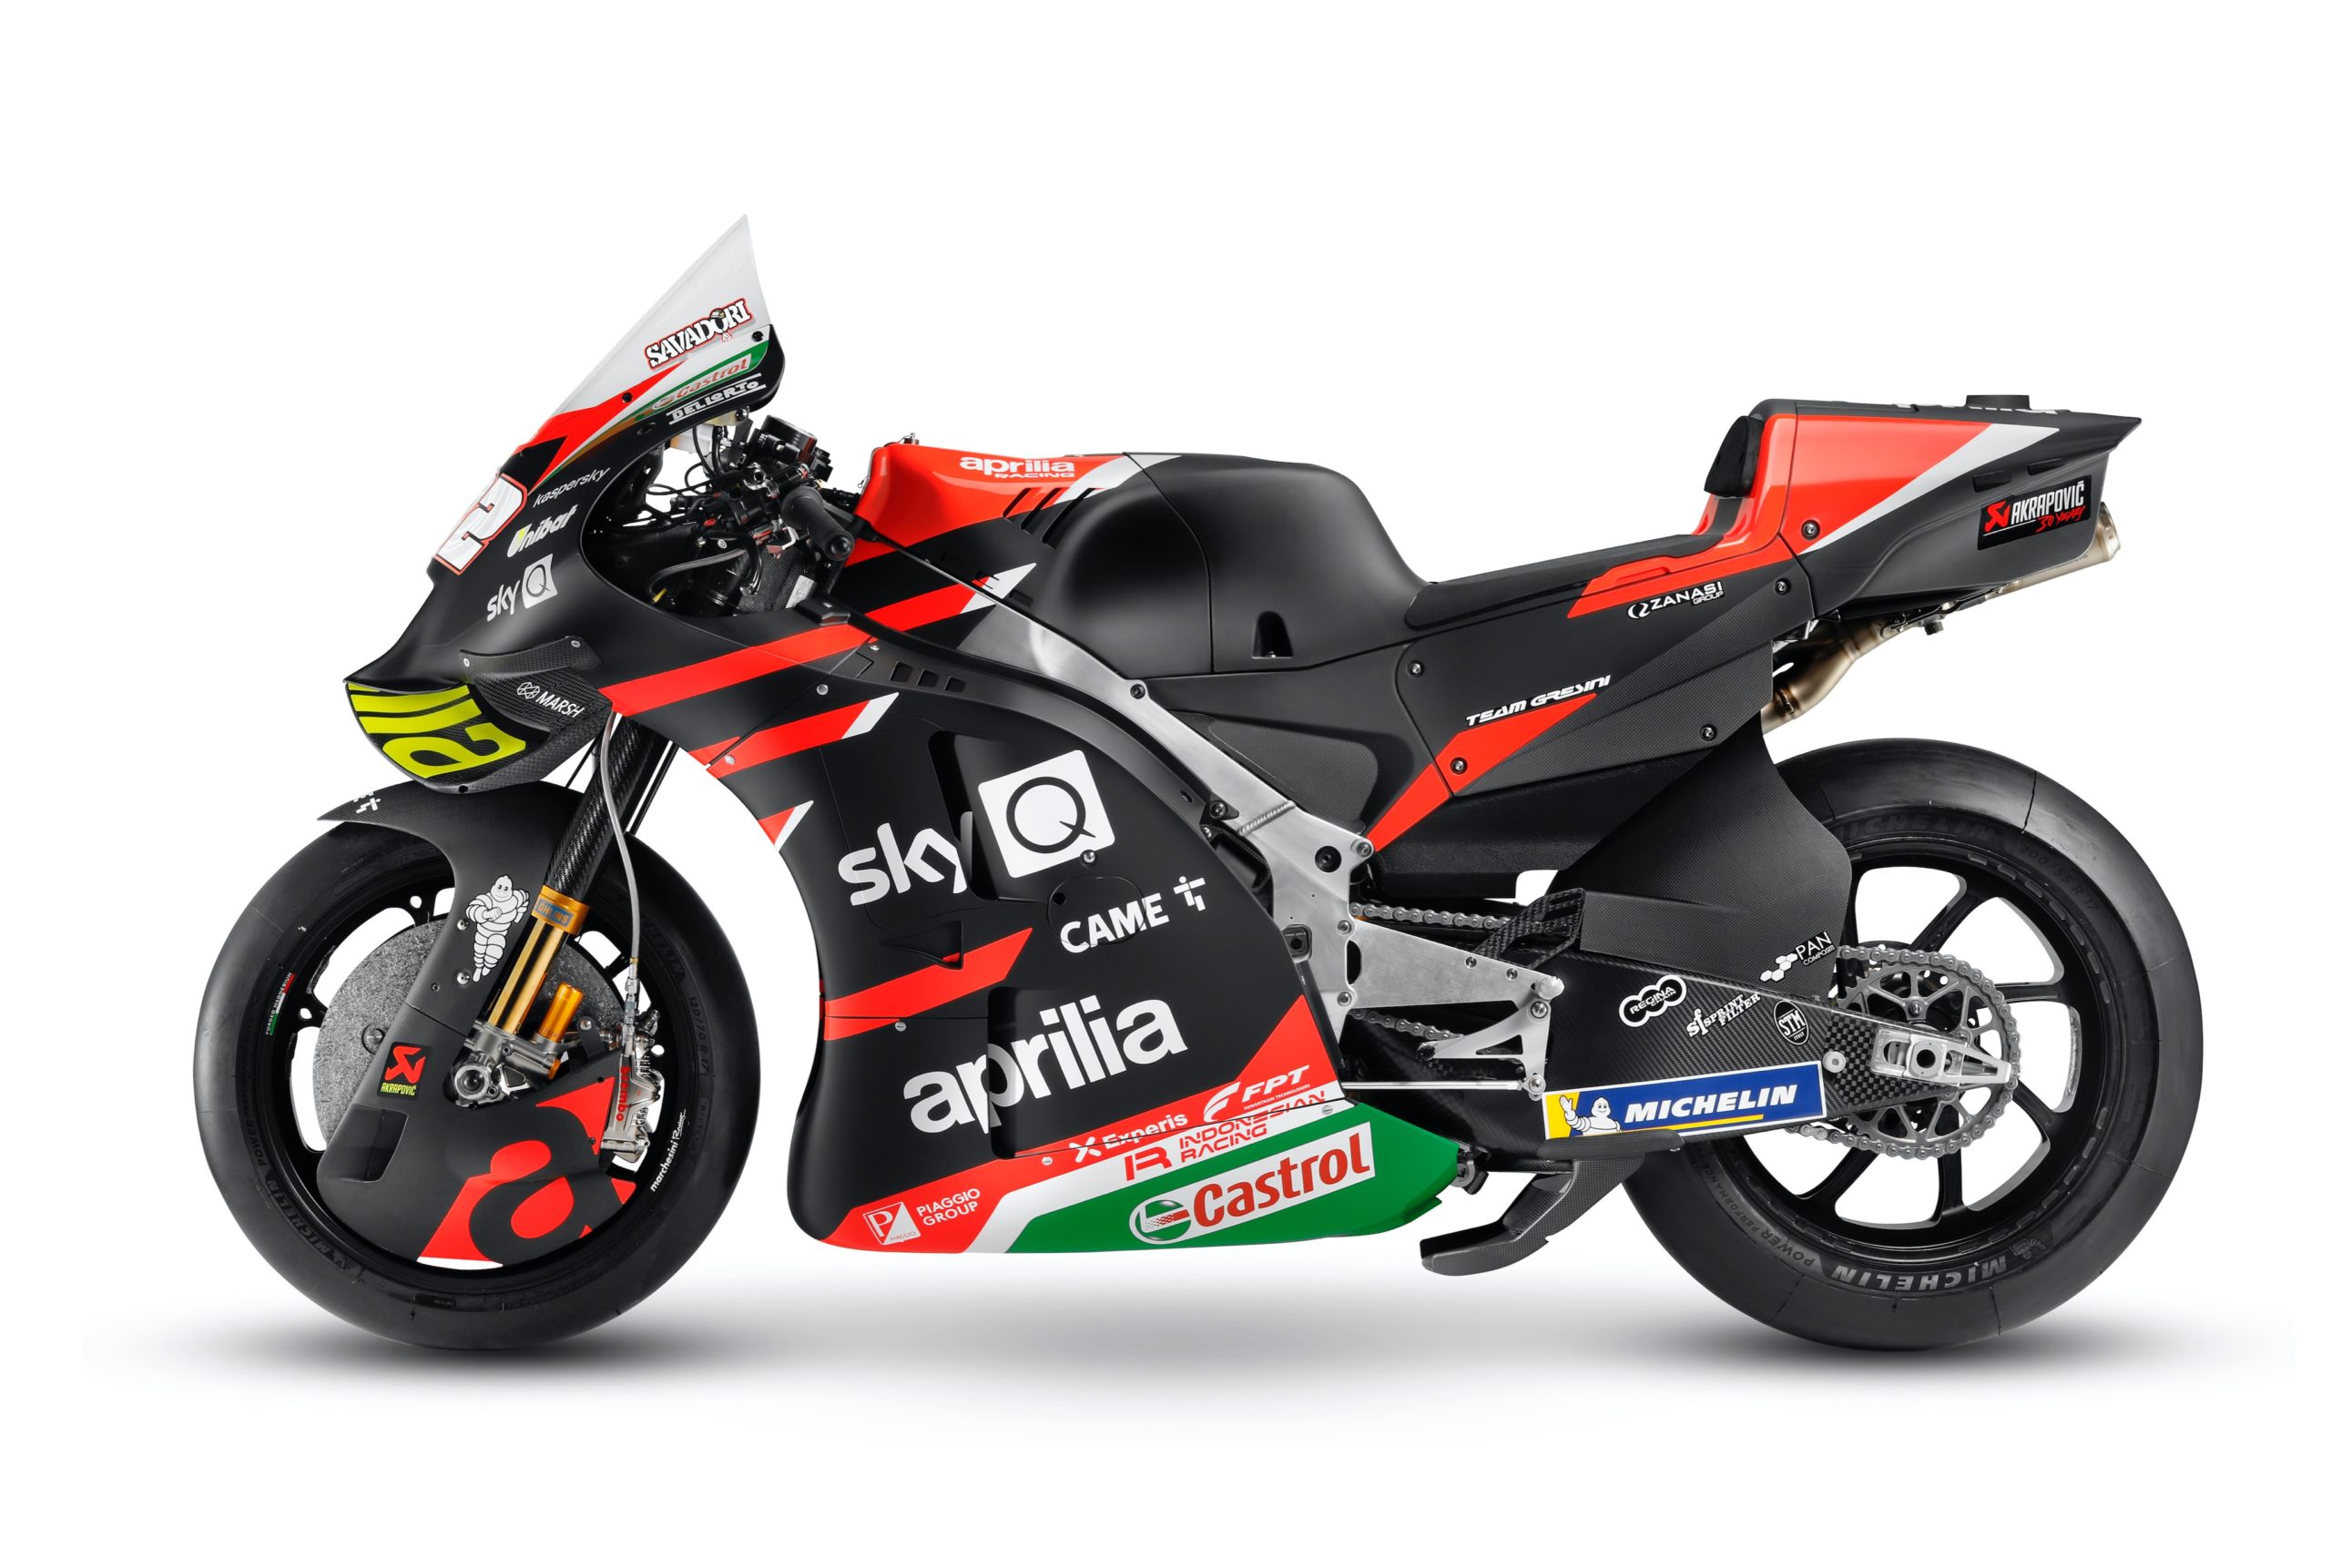 Aprilia reveals their 2021 MotoGP contender with Savadori and Espargaro